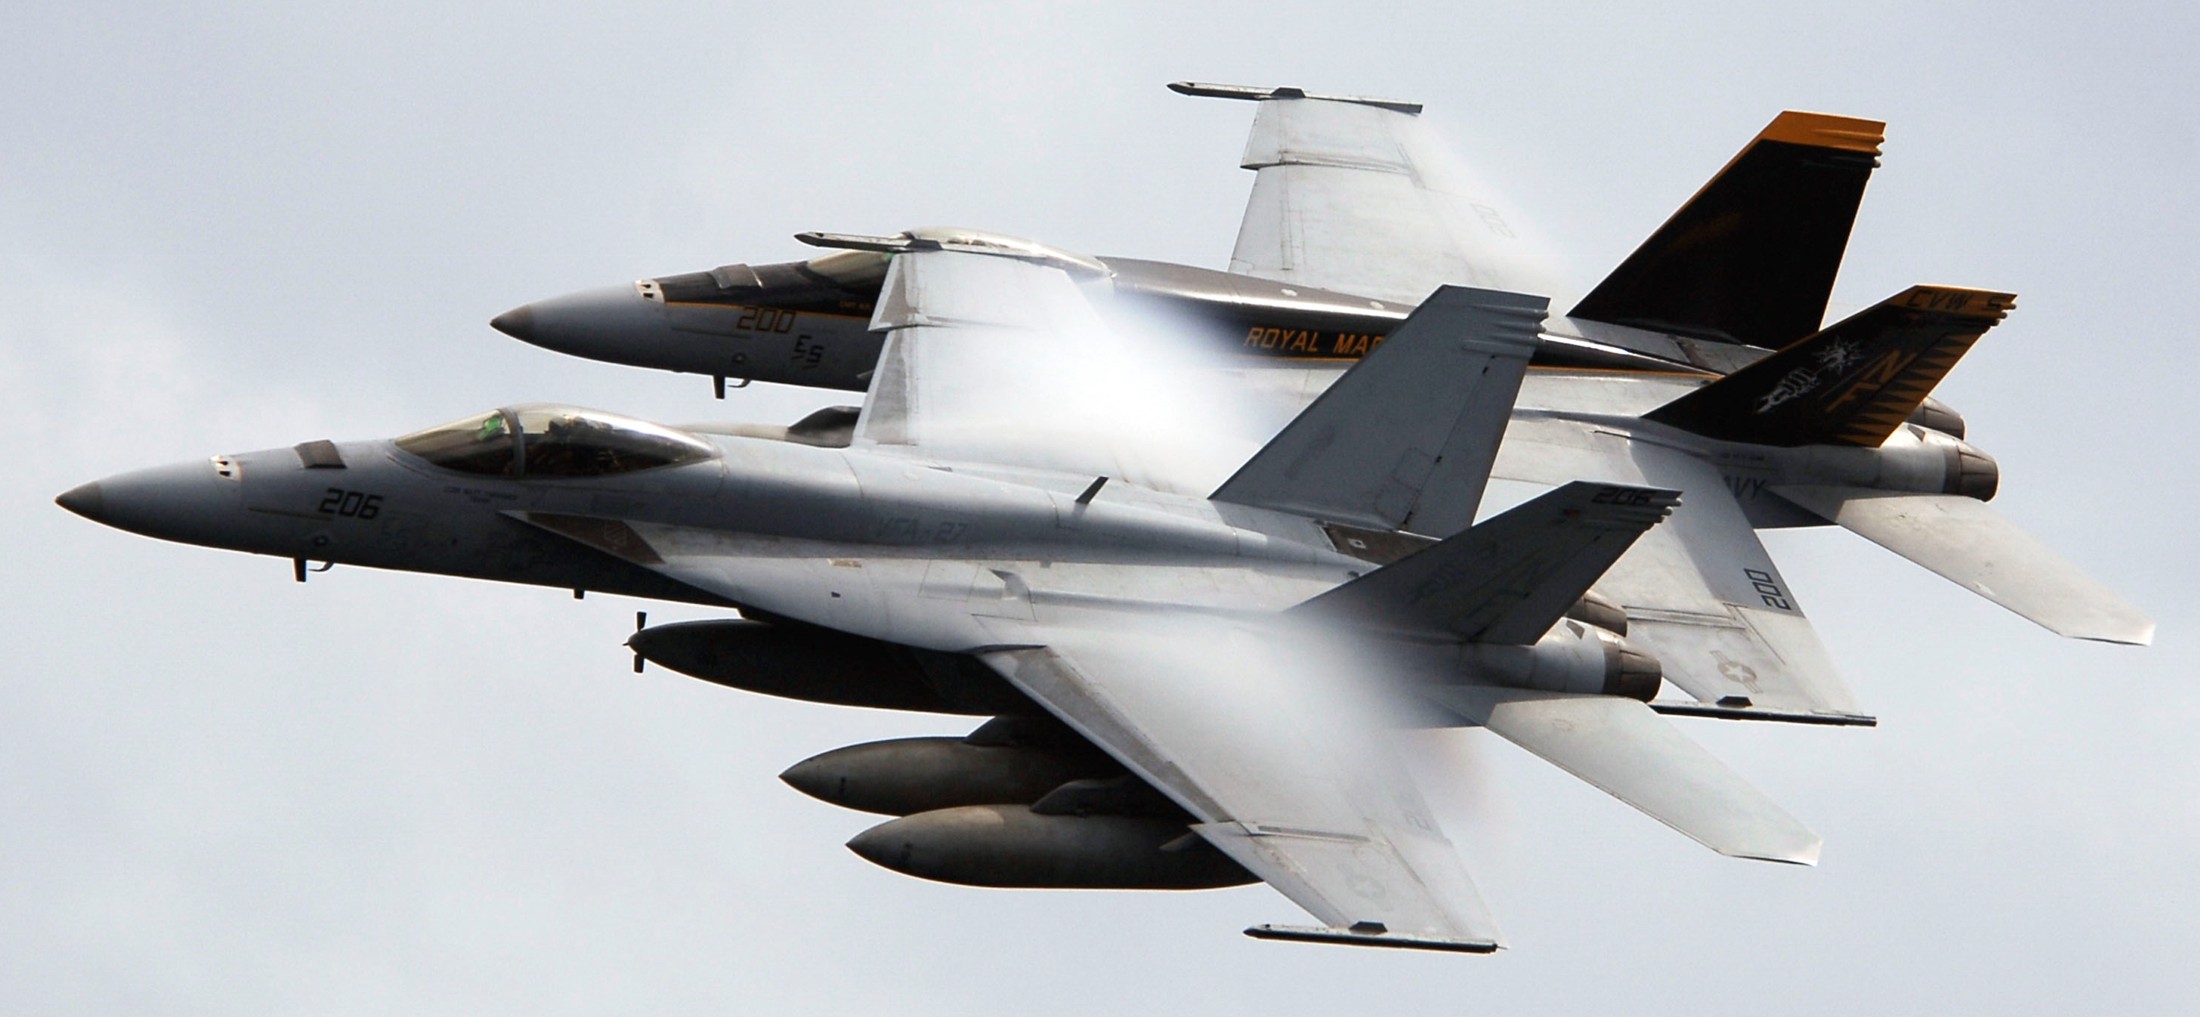 vfa-27 royal maces strike fighter squadron f/a-18e super hornet cv-63 uss kitty hawk cvw-5 us navy 137p